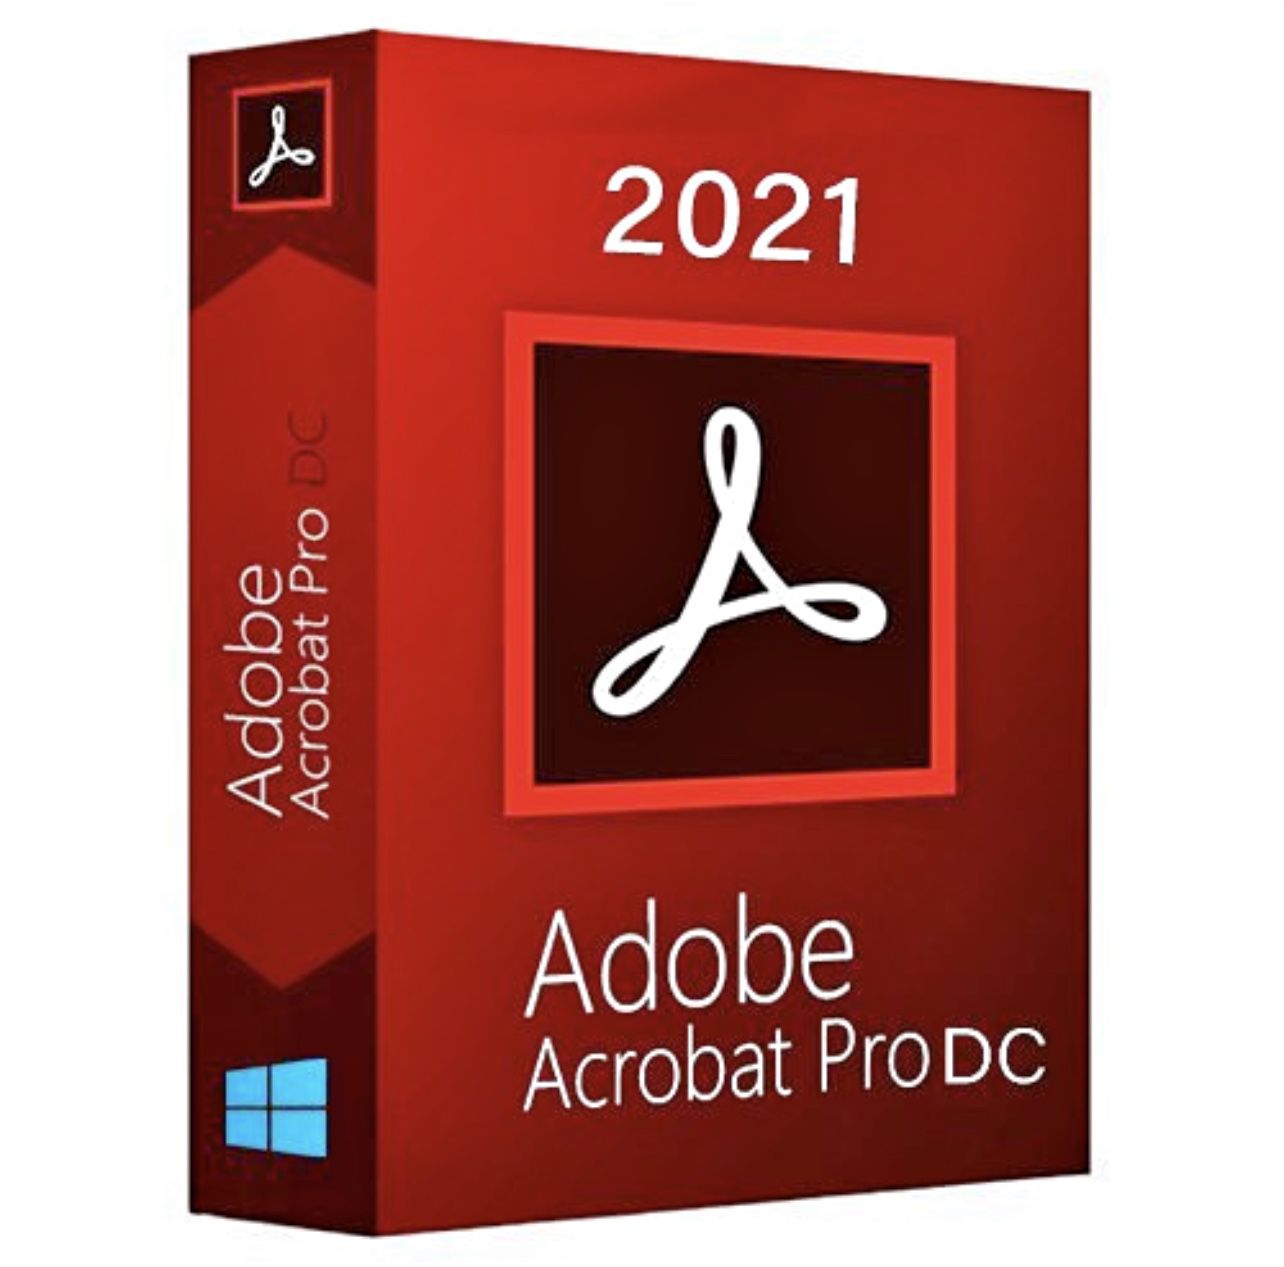 Adobe PDF 2021 Acrobat Pro - Windows & Mac OS + FREE 8GB USB Flash Drive